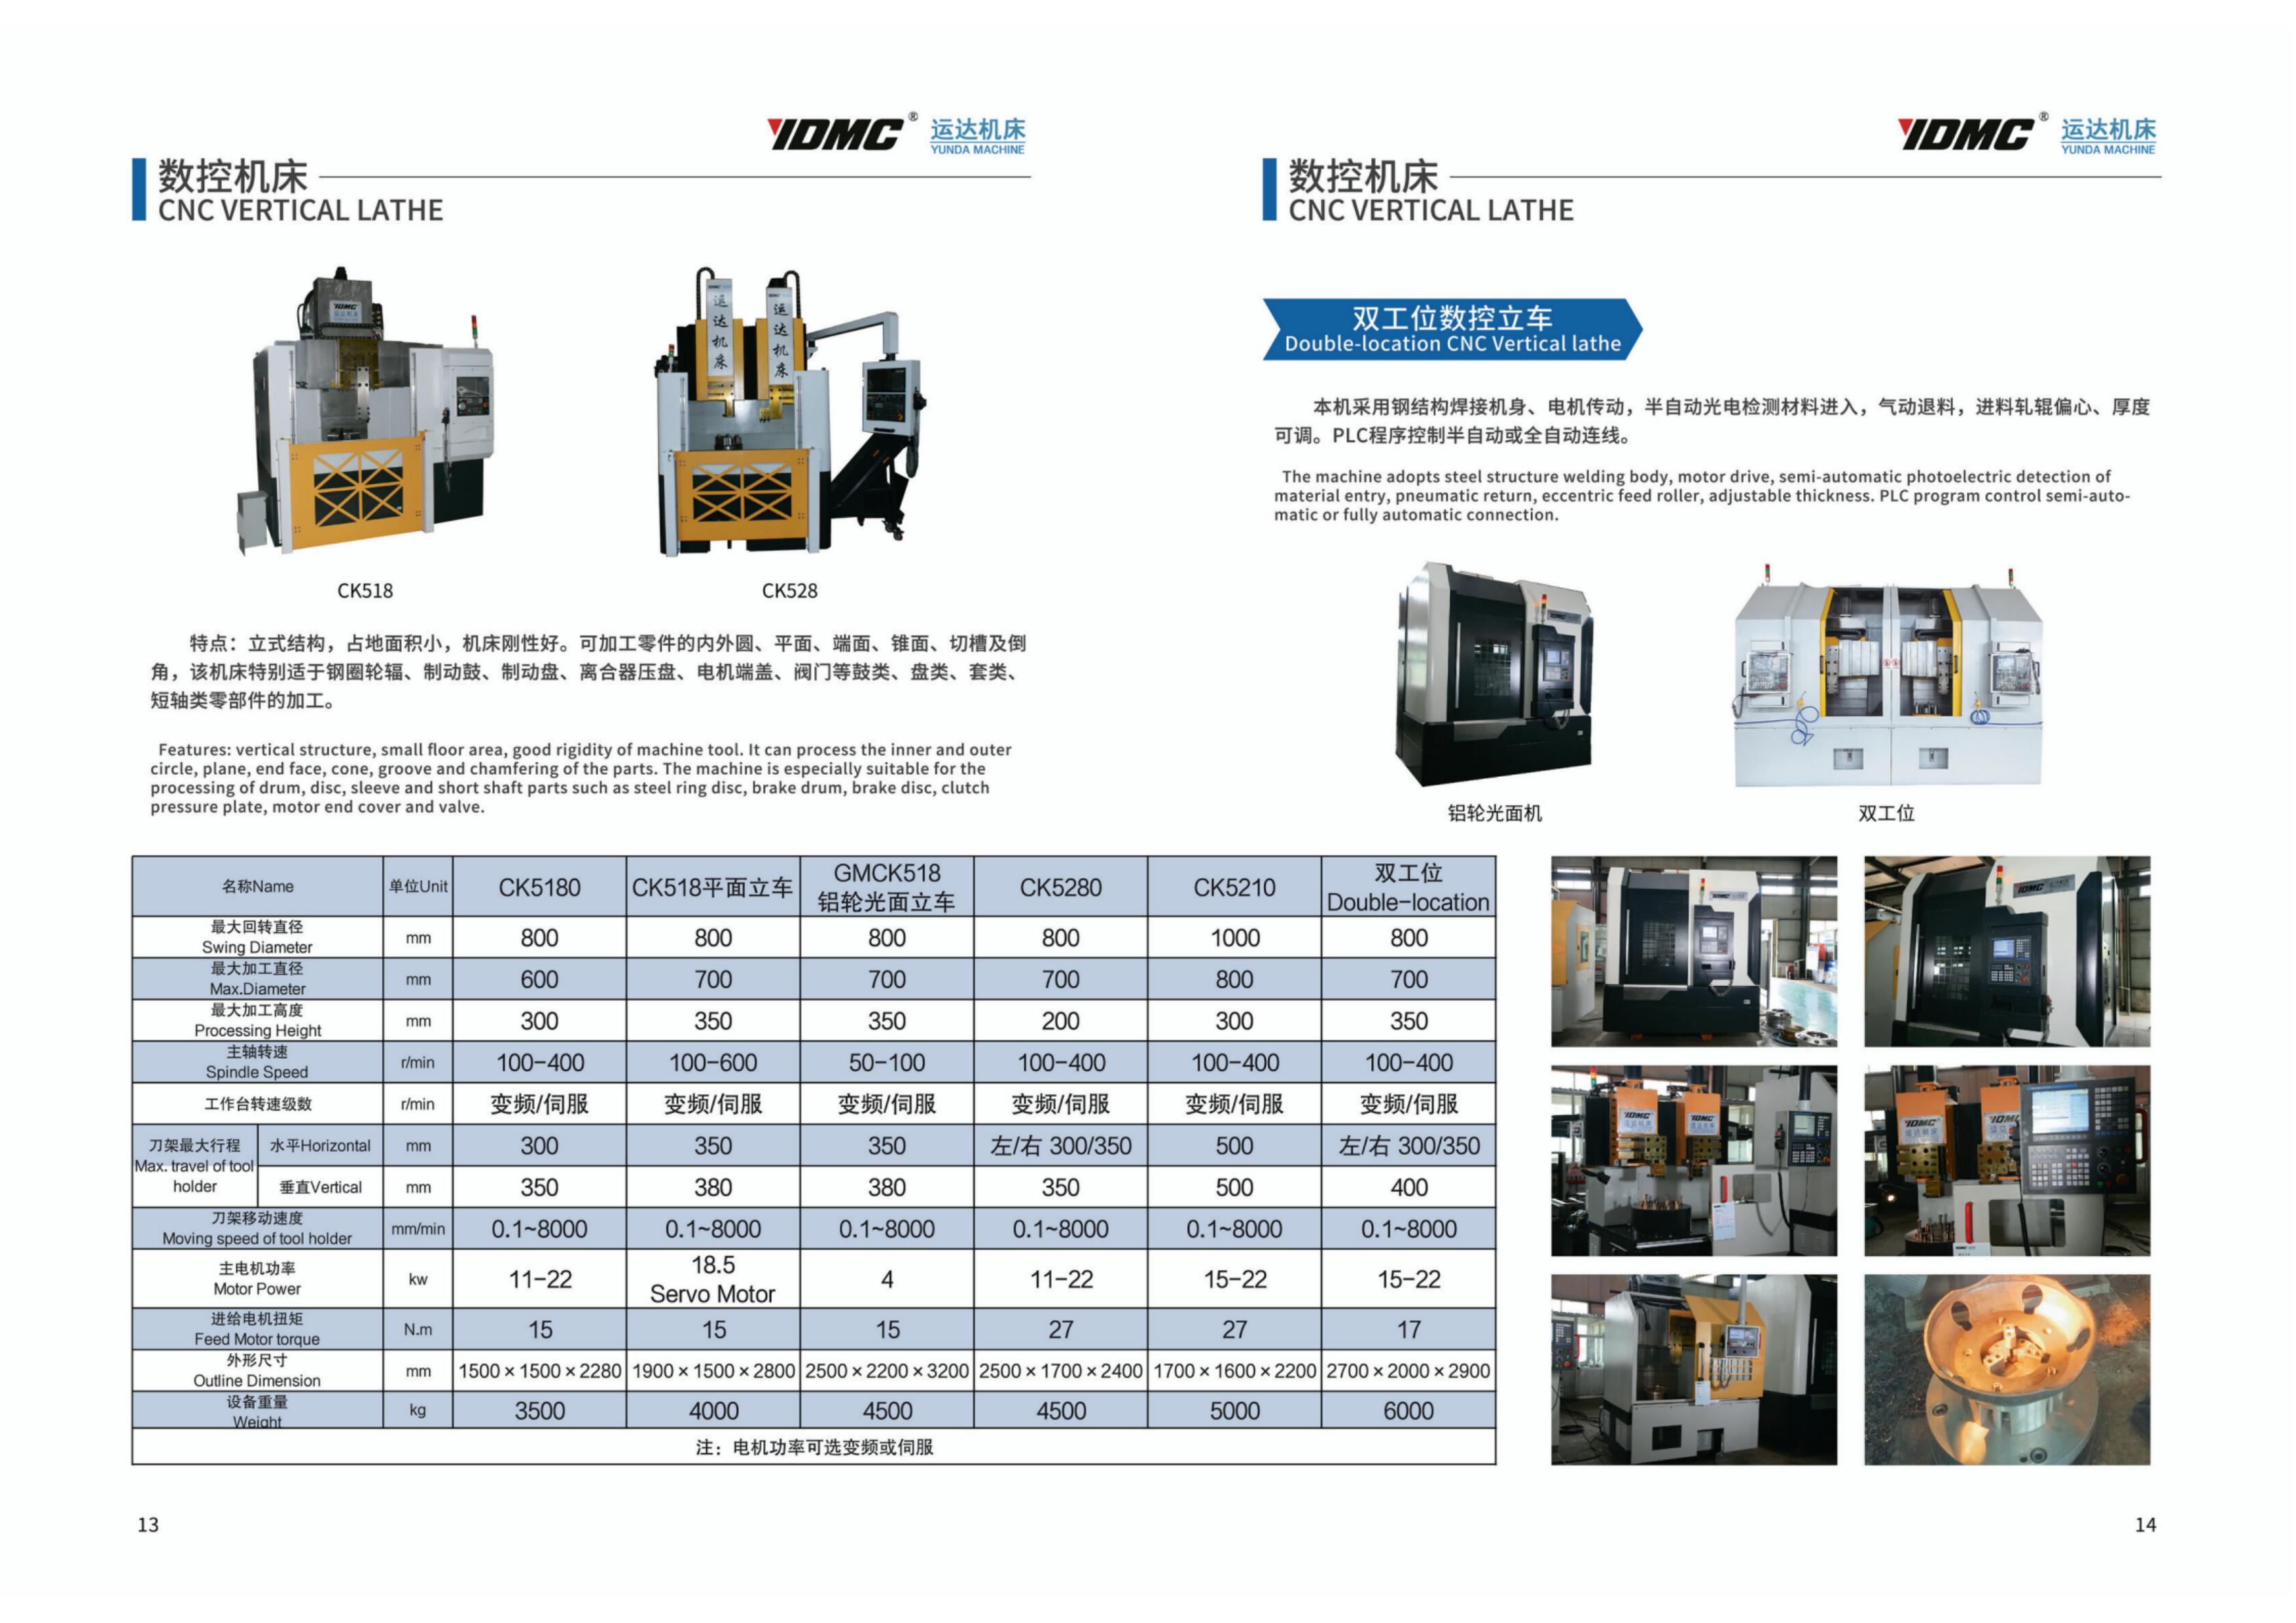 CNC Vertical Lathe Machines YDMC